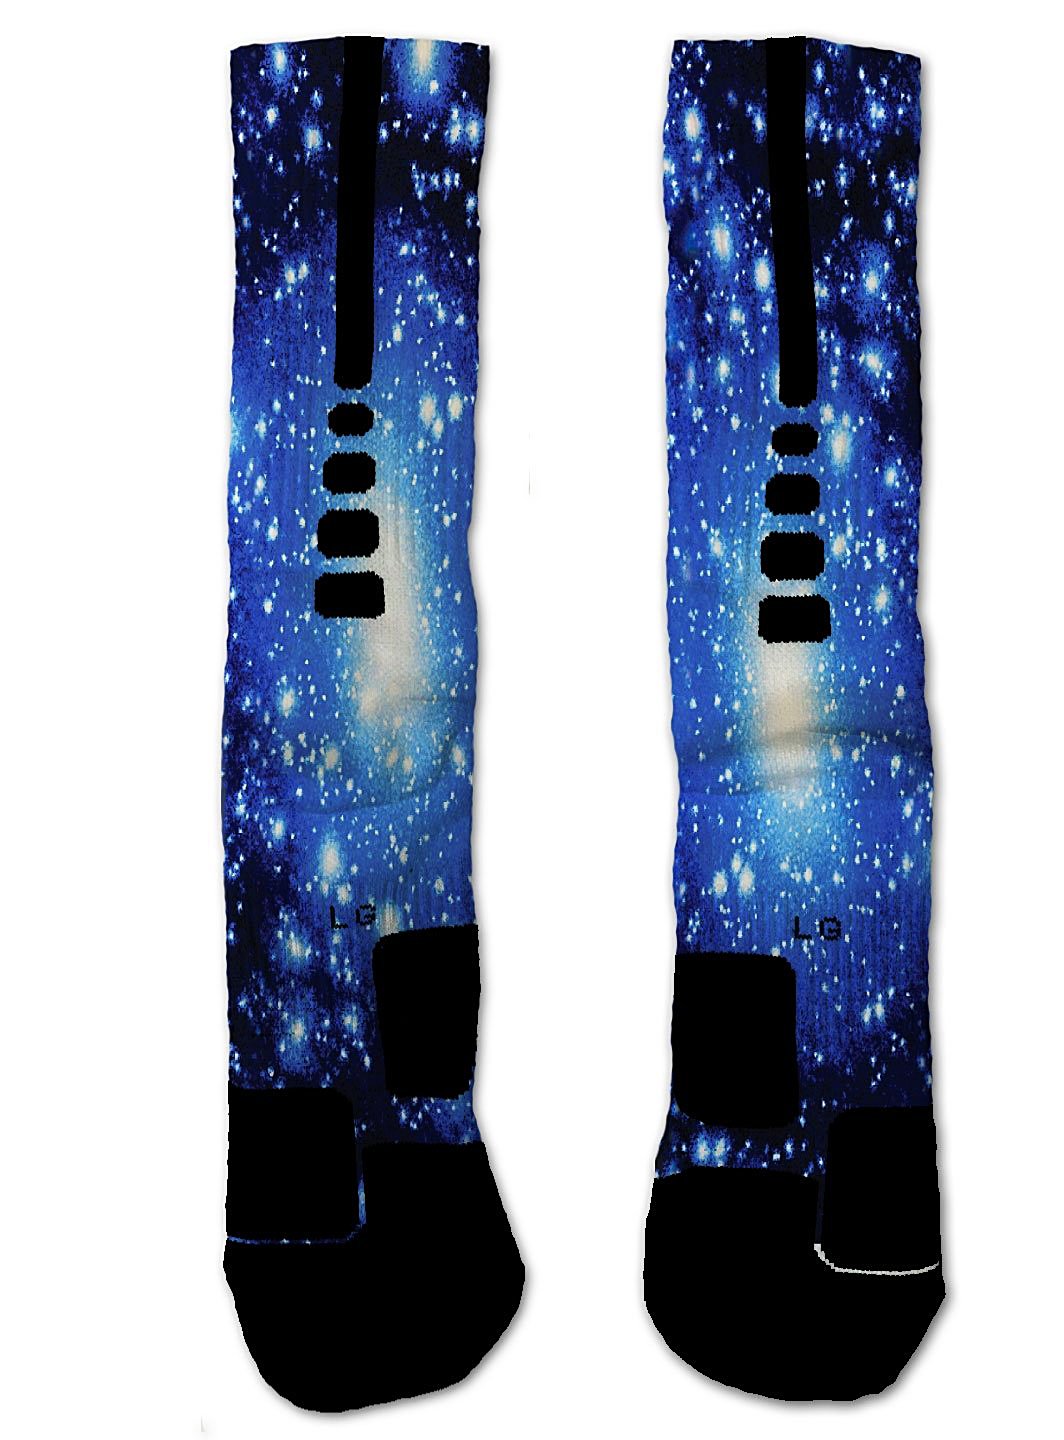 galaxy elite socks